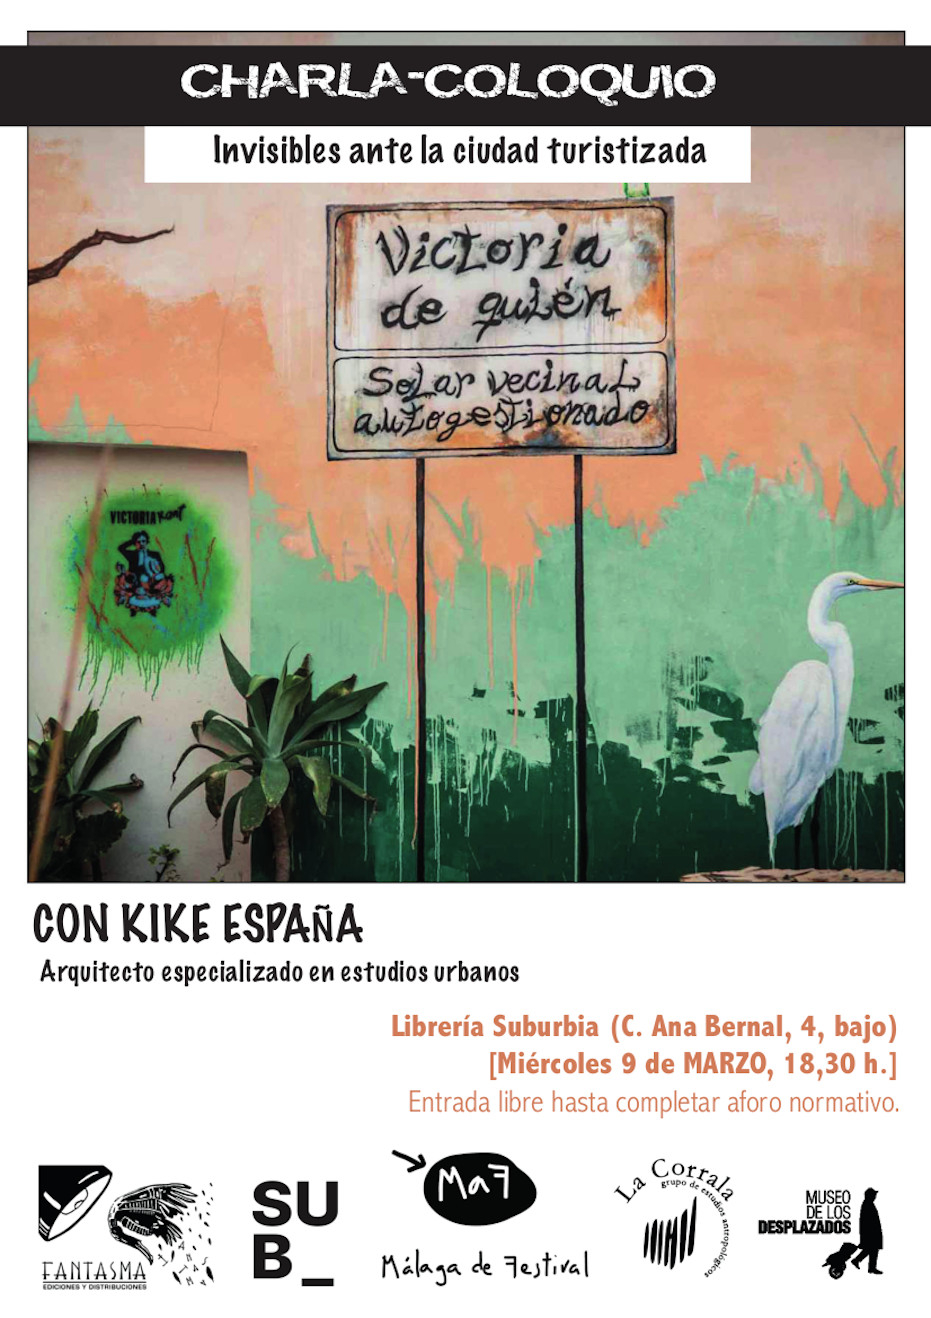 Charla-coloquio con Kike España: Invisibles ante la ciudad turistizada